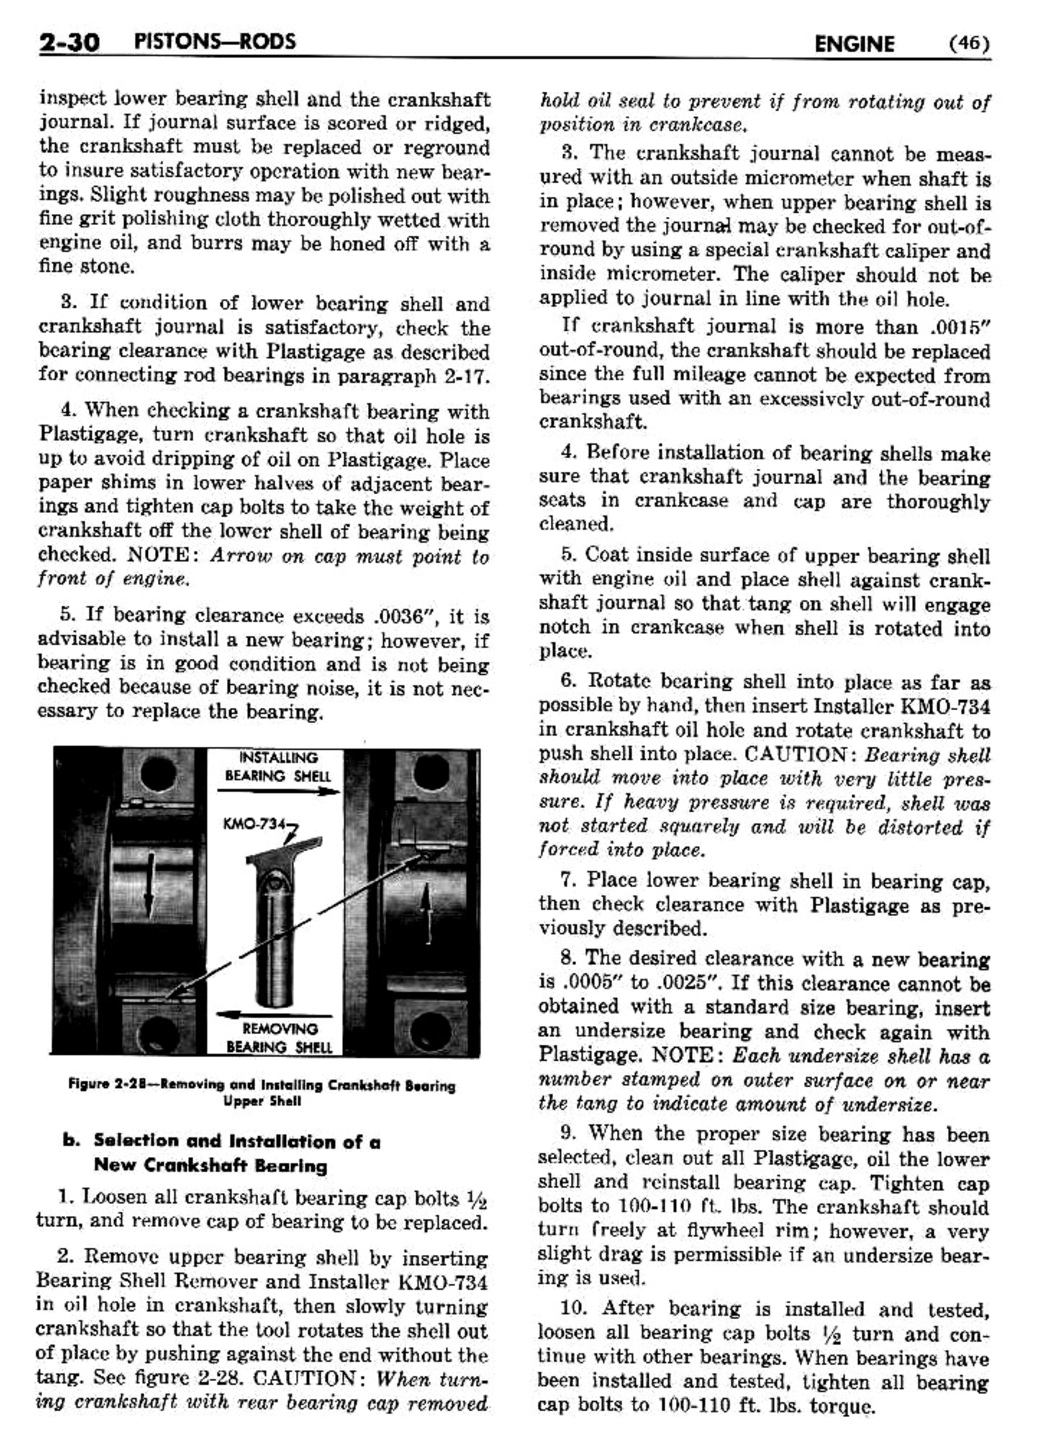 n_03 1956 Buick Shop Manual - Engine-030-030.jpg